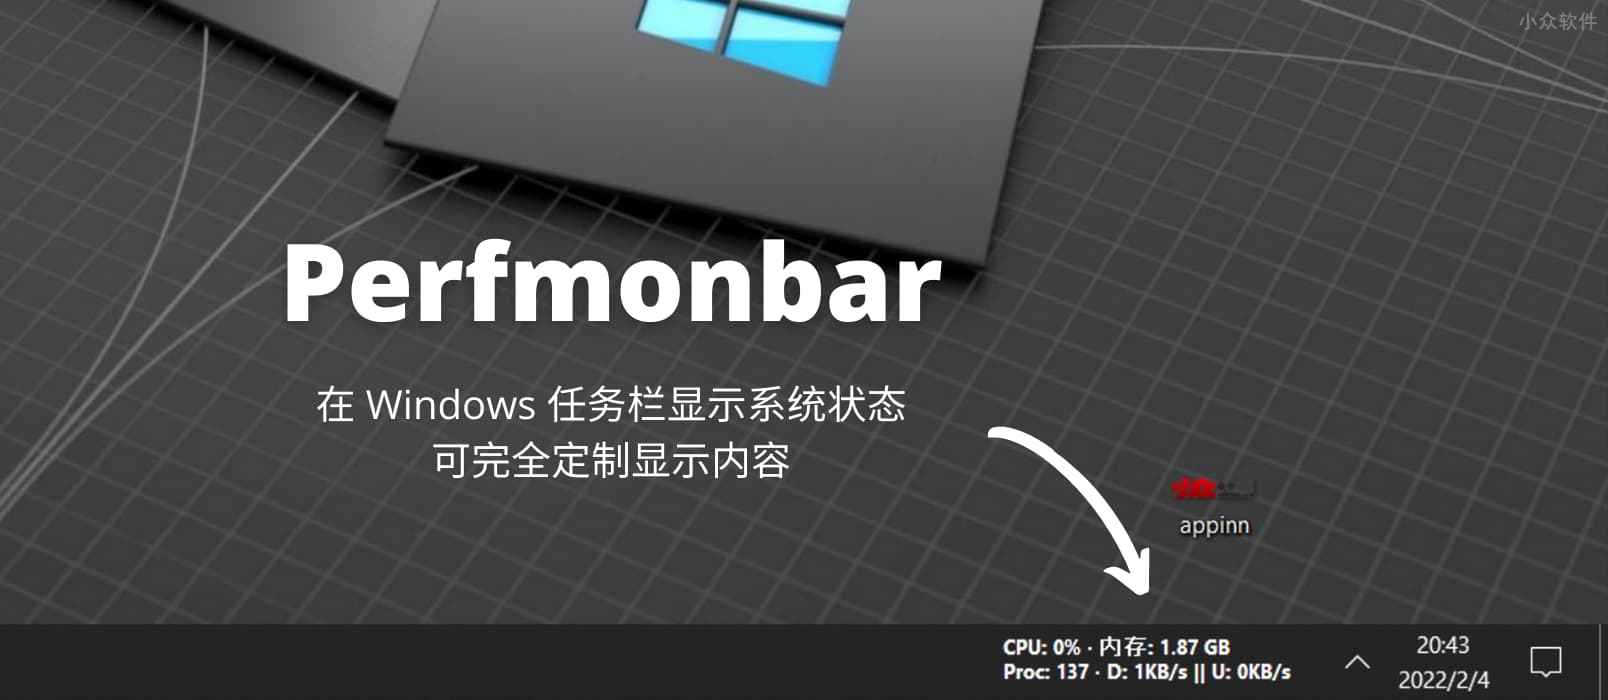 Perfmonbar - 在 Windows 任务栏显示系统状态，可完全定制显示内容